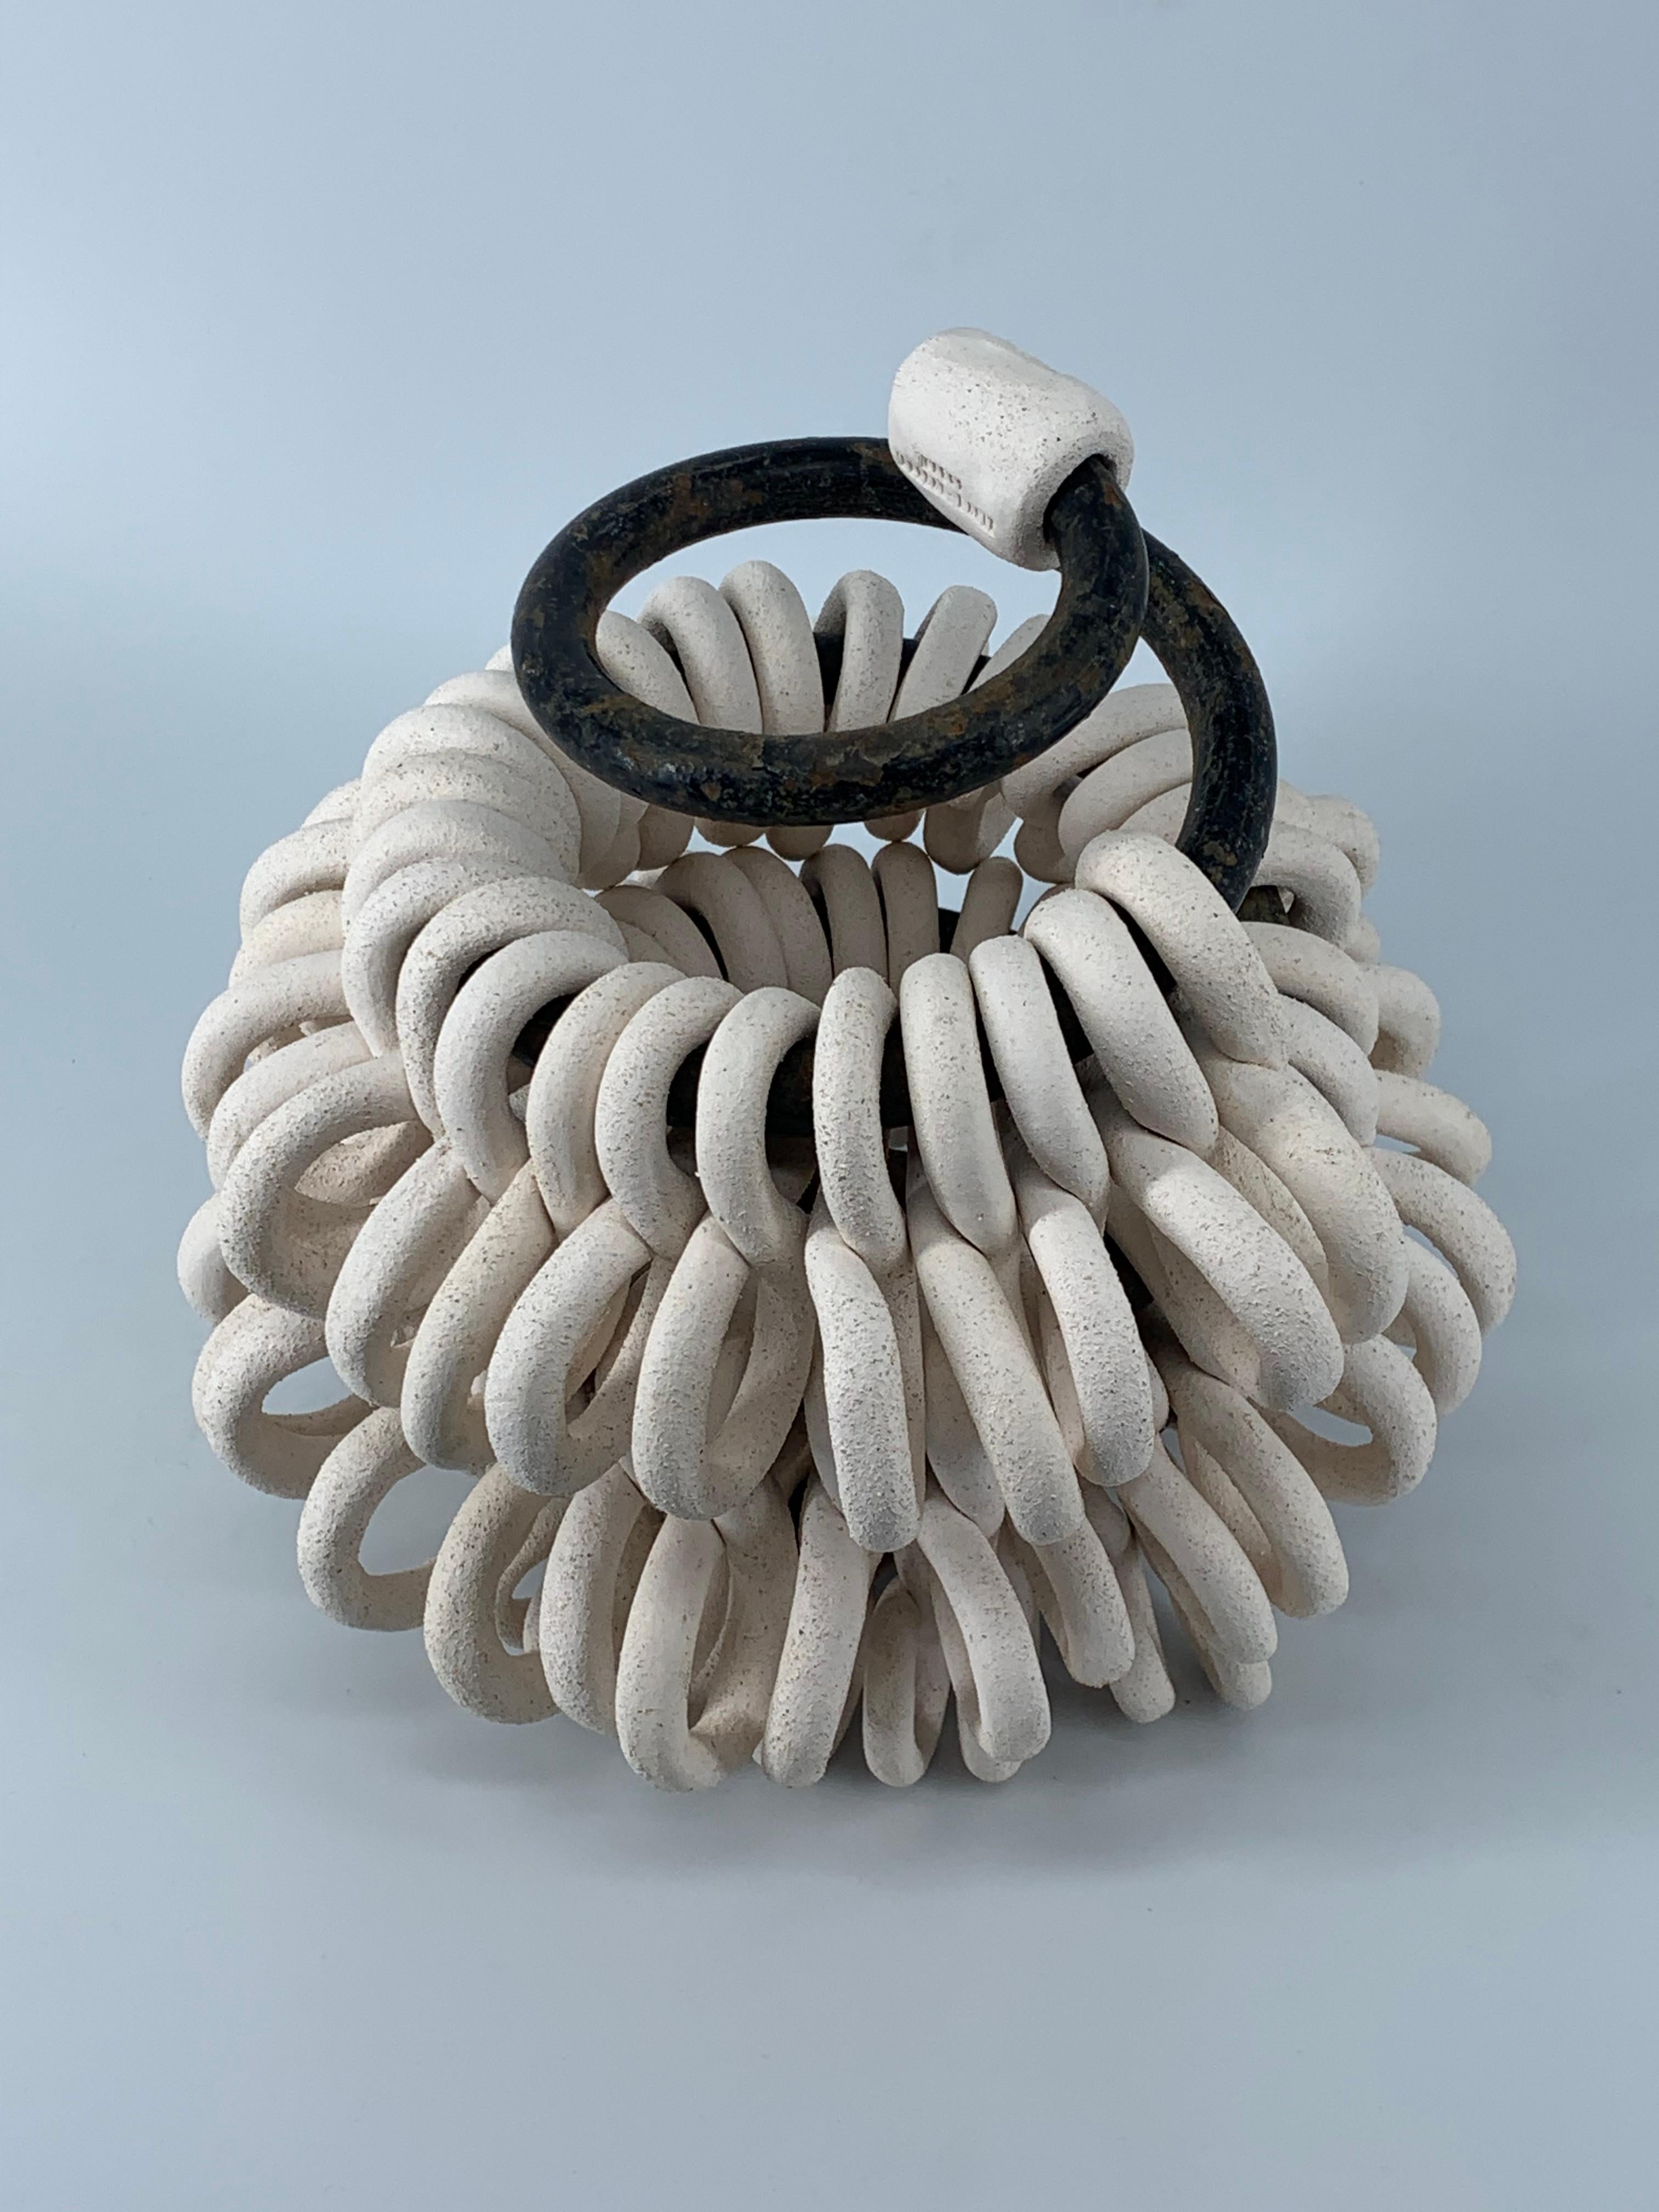 Infinity in infinity in a spiral ІІ - Abstract Geometric Sculpture by Olesia Dvorak-Galik